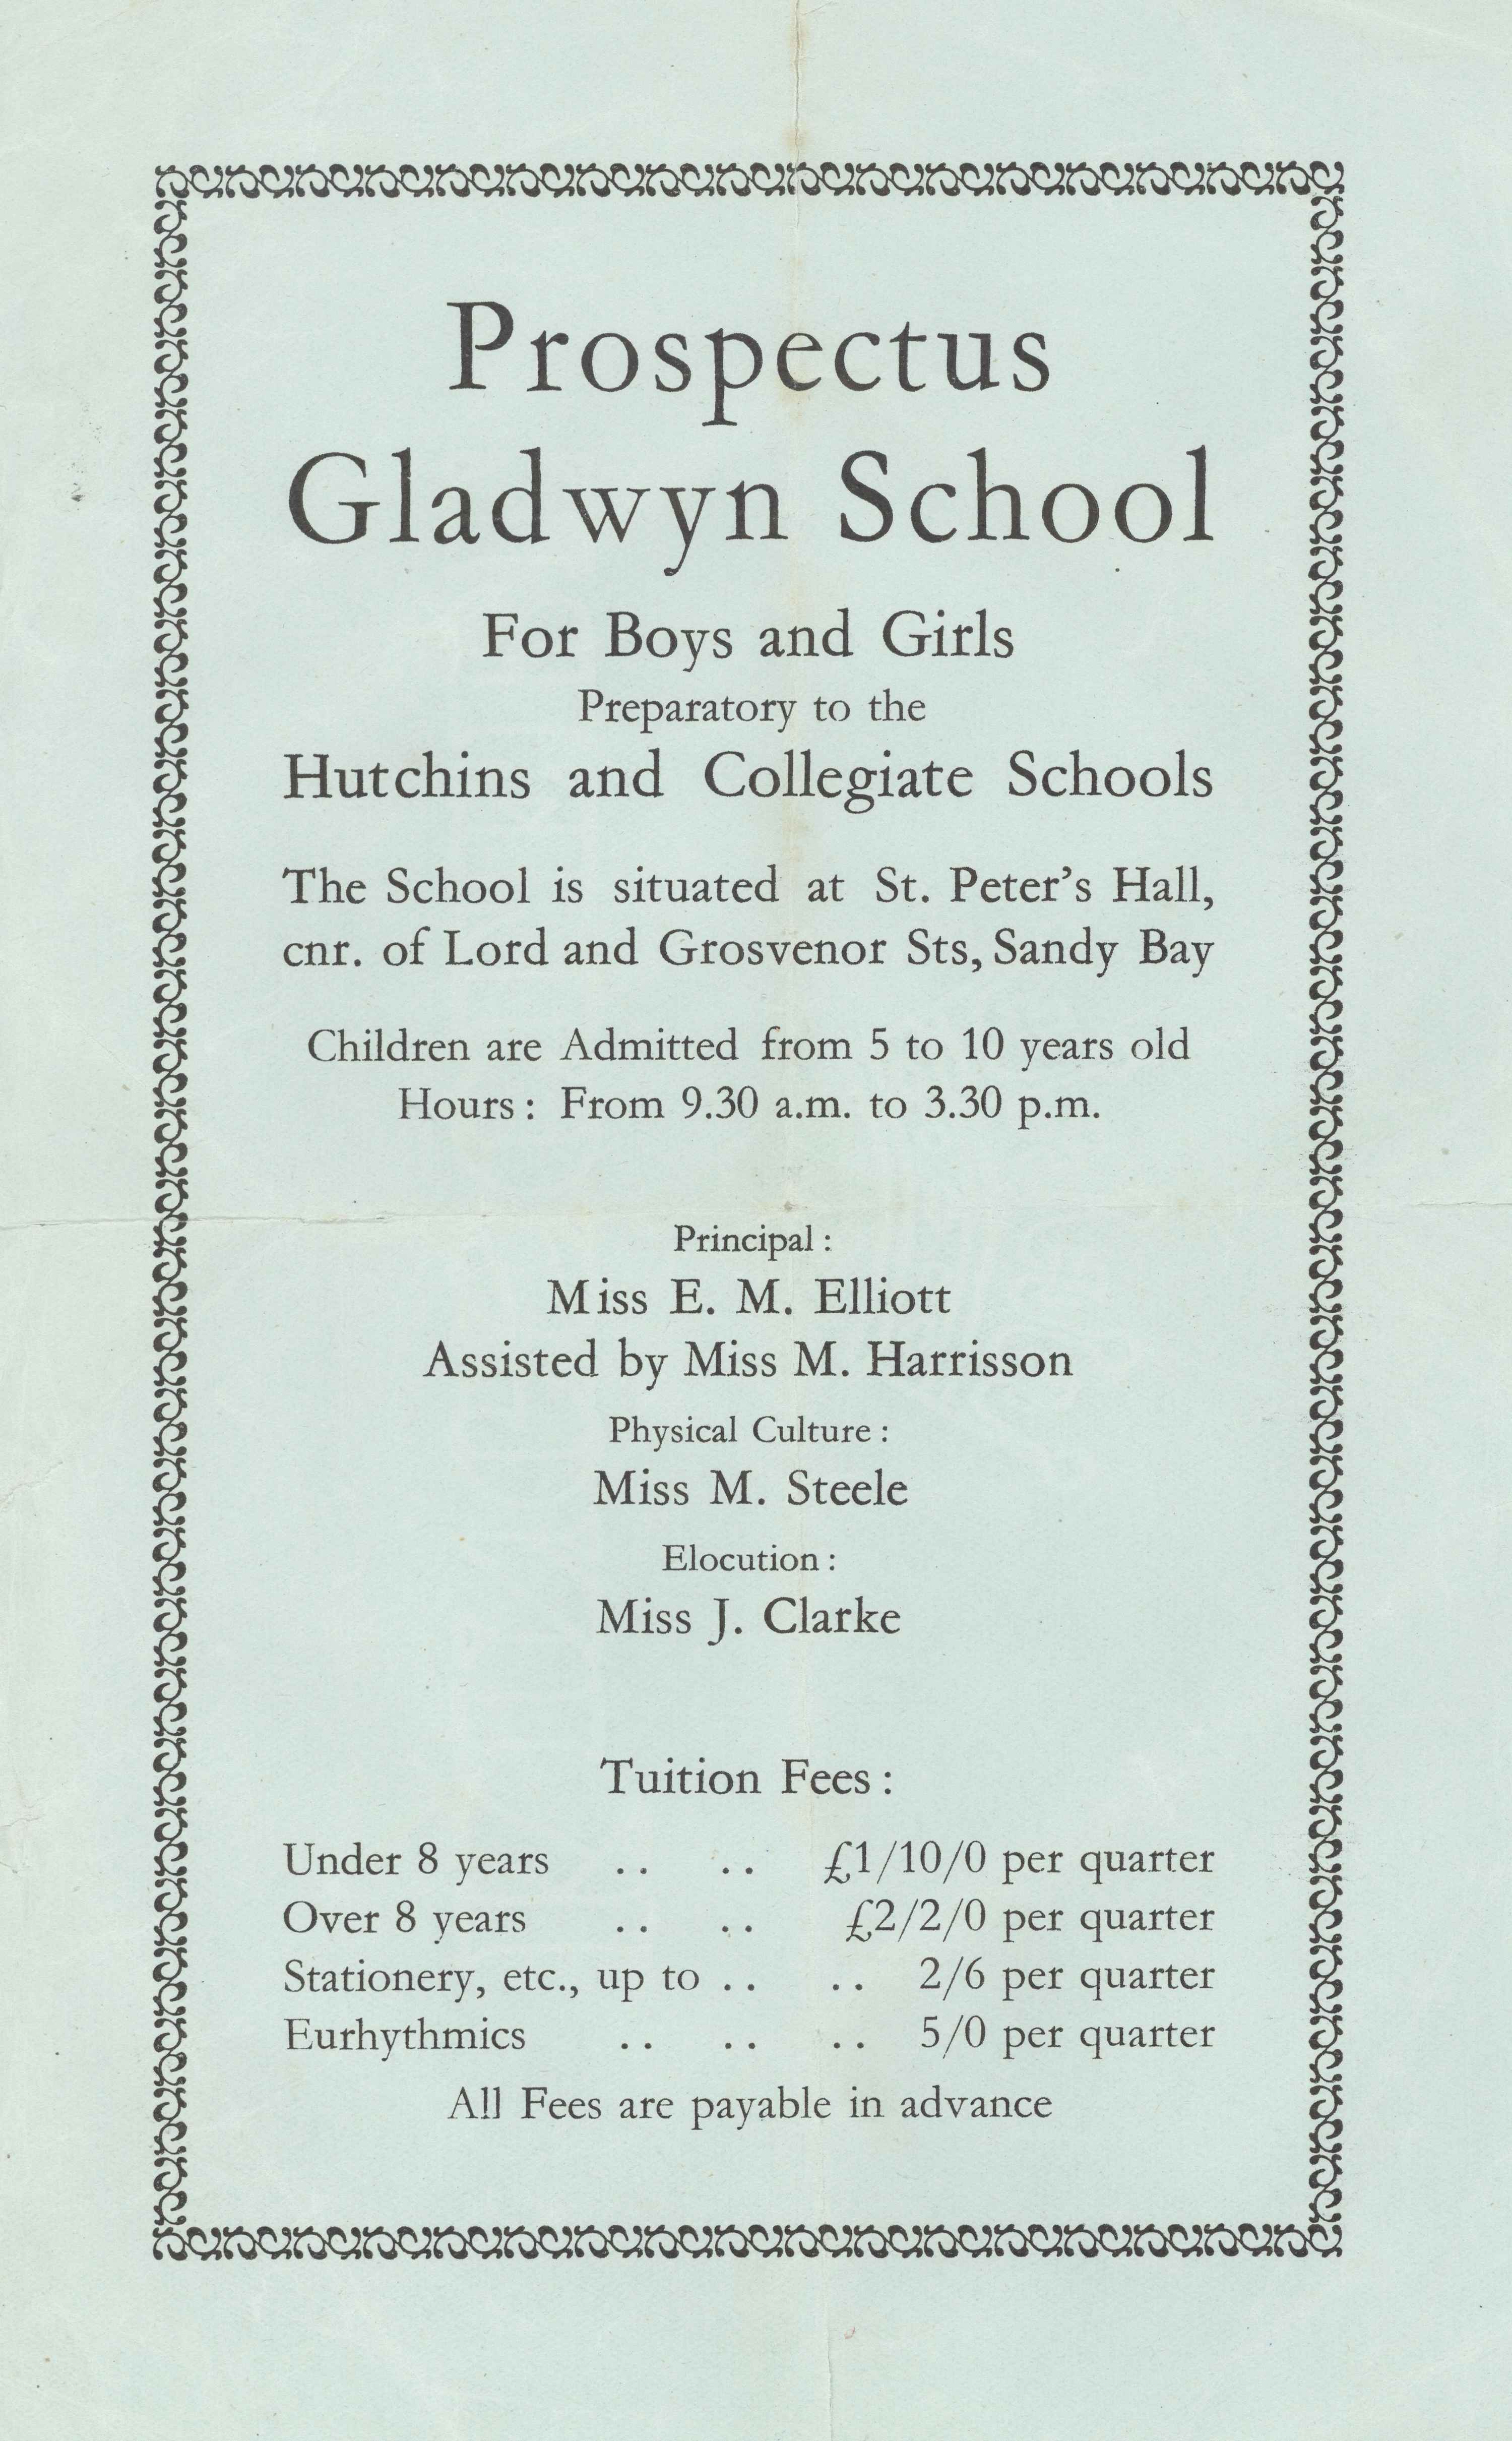 Gladwyn School prospectus, c1935.